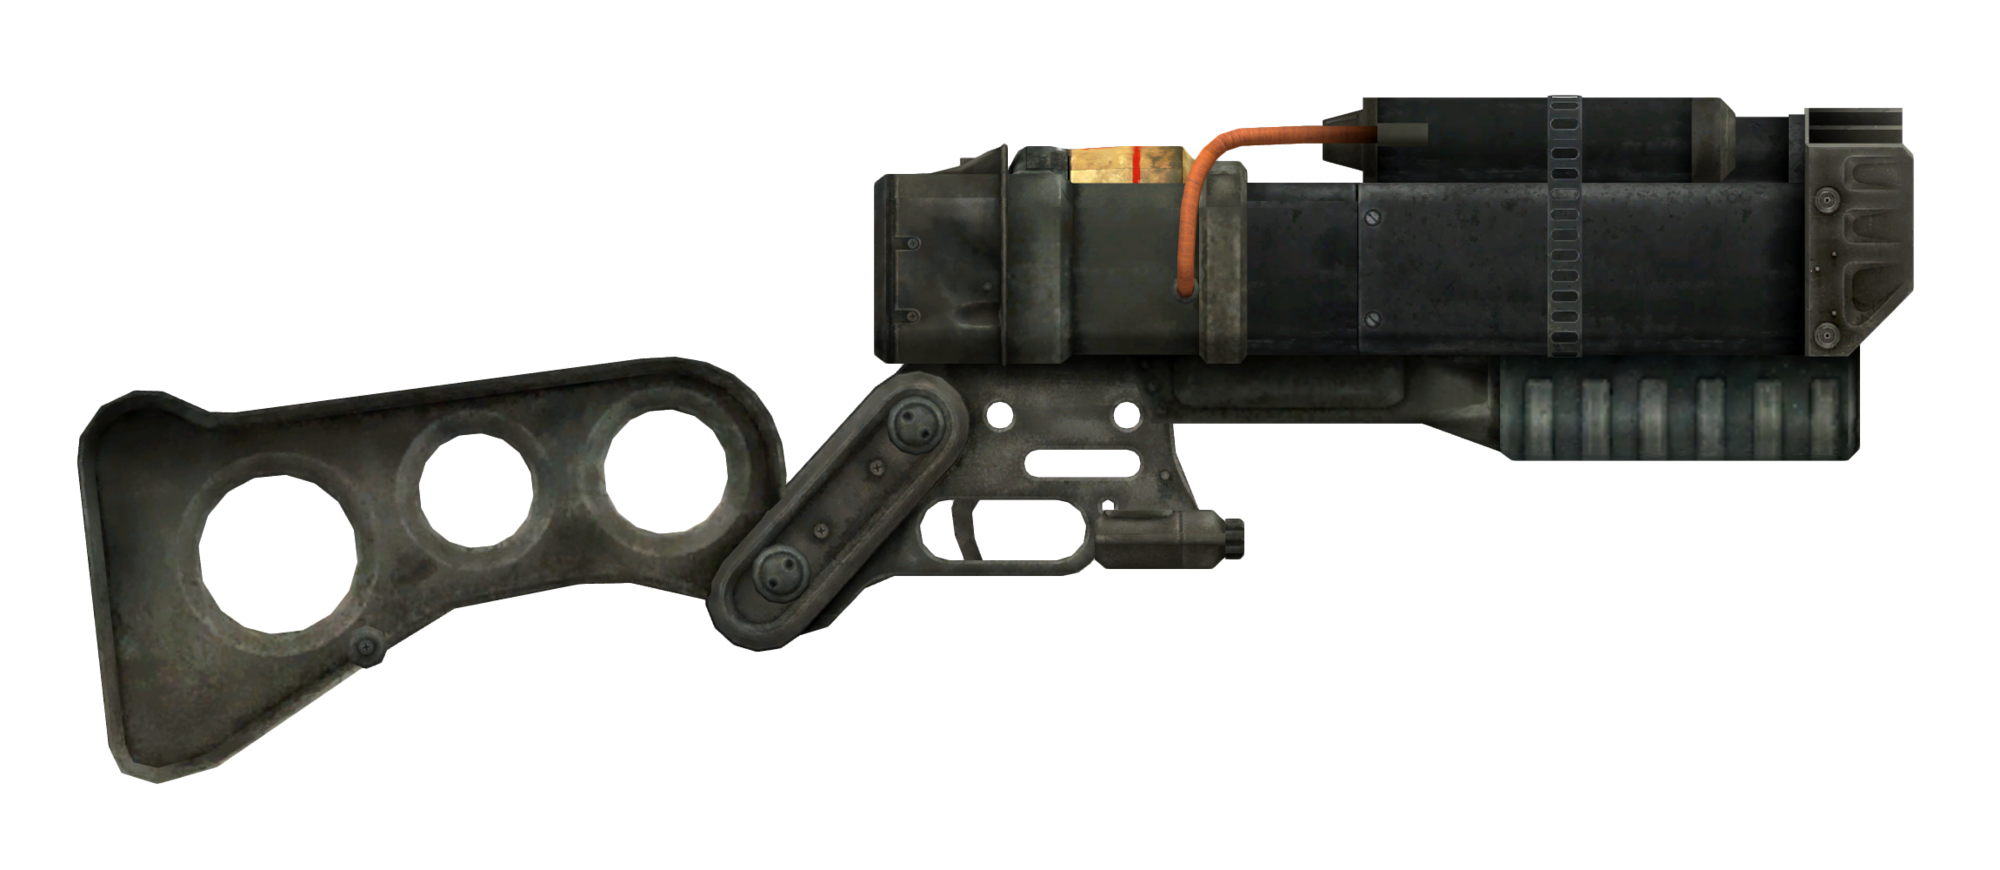 Tri-beam laser rifle (Fallout 3) | Fallout Wiki | Fandom powered ...